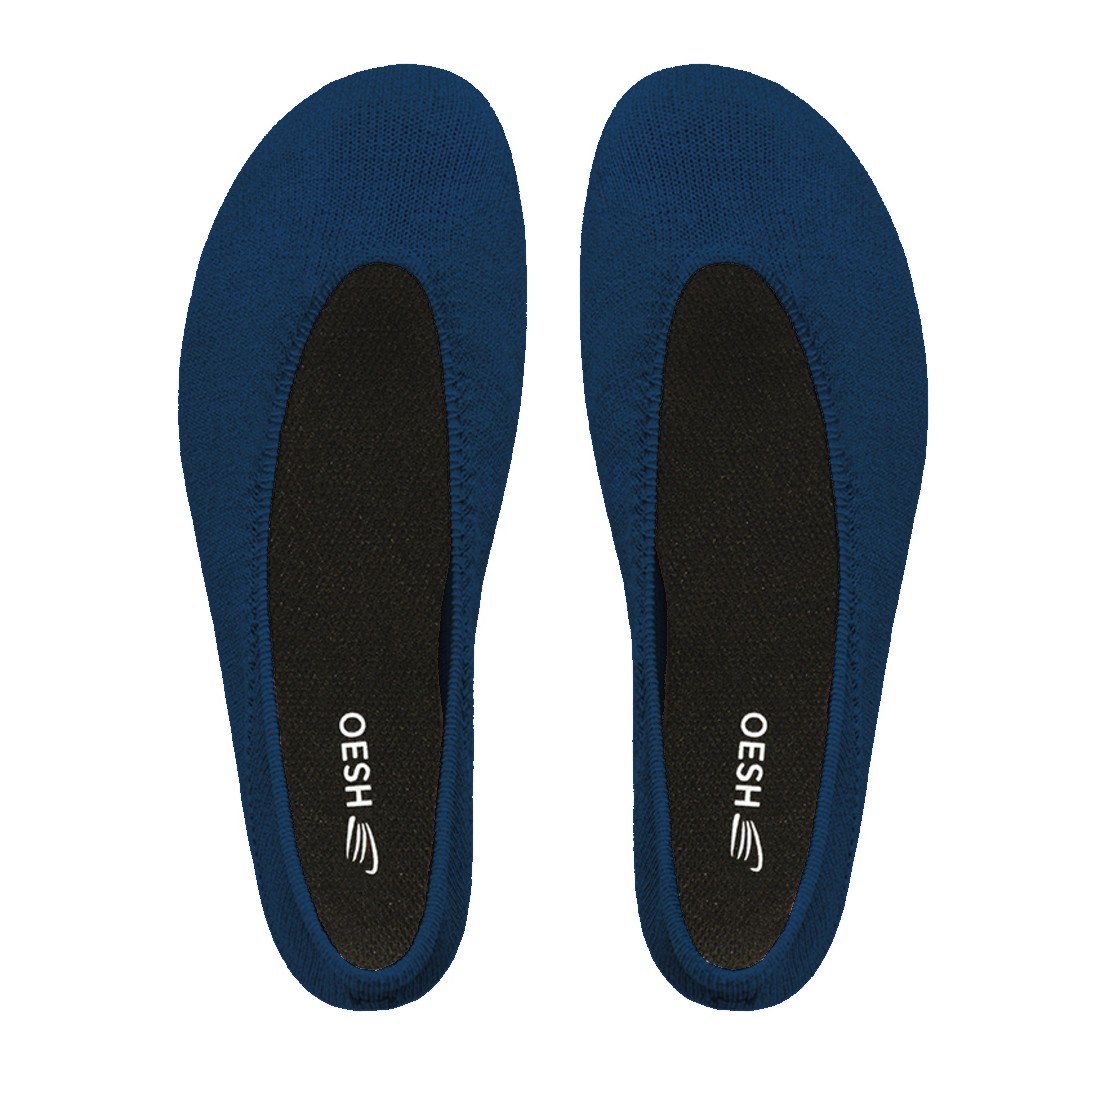 Dream Chesapeake Blue | OESH Shoes for women by women